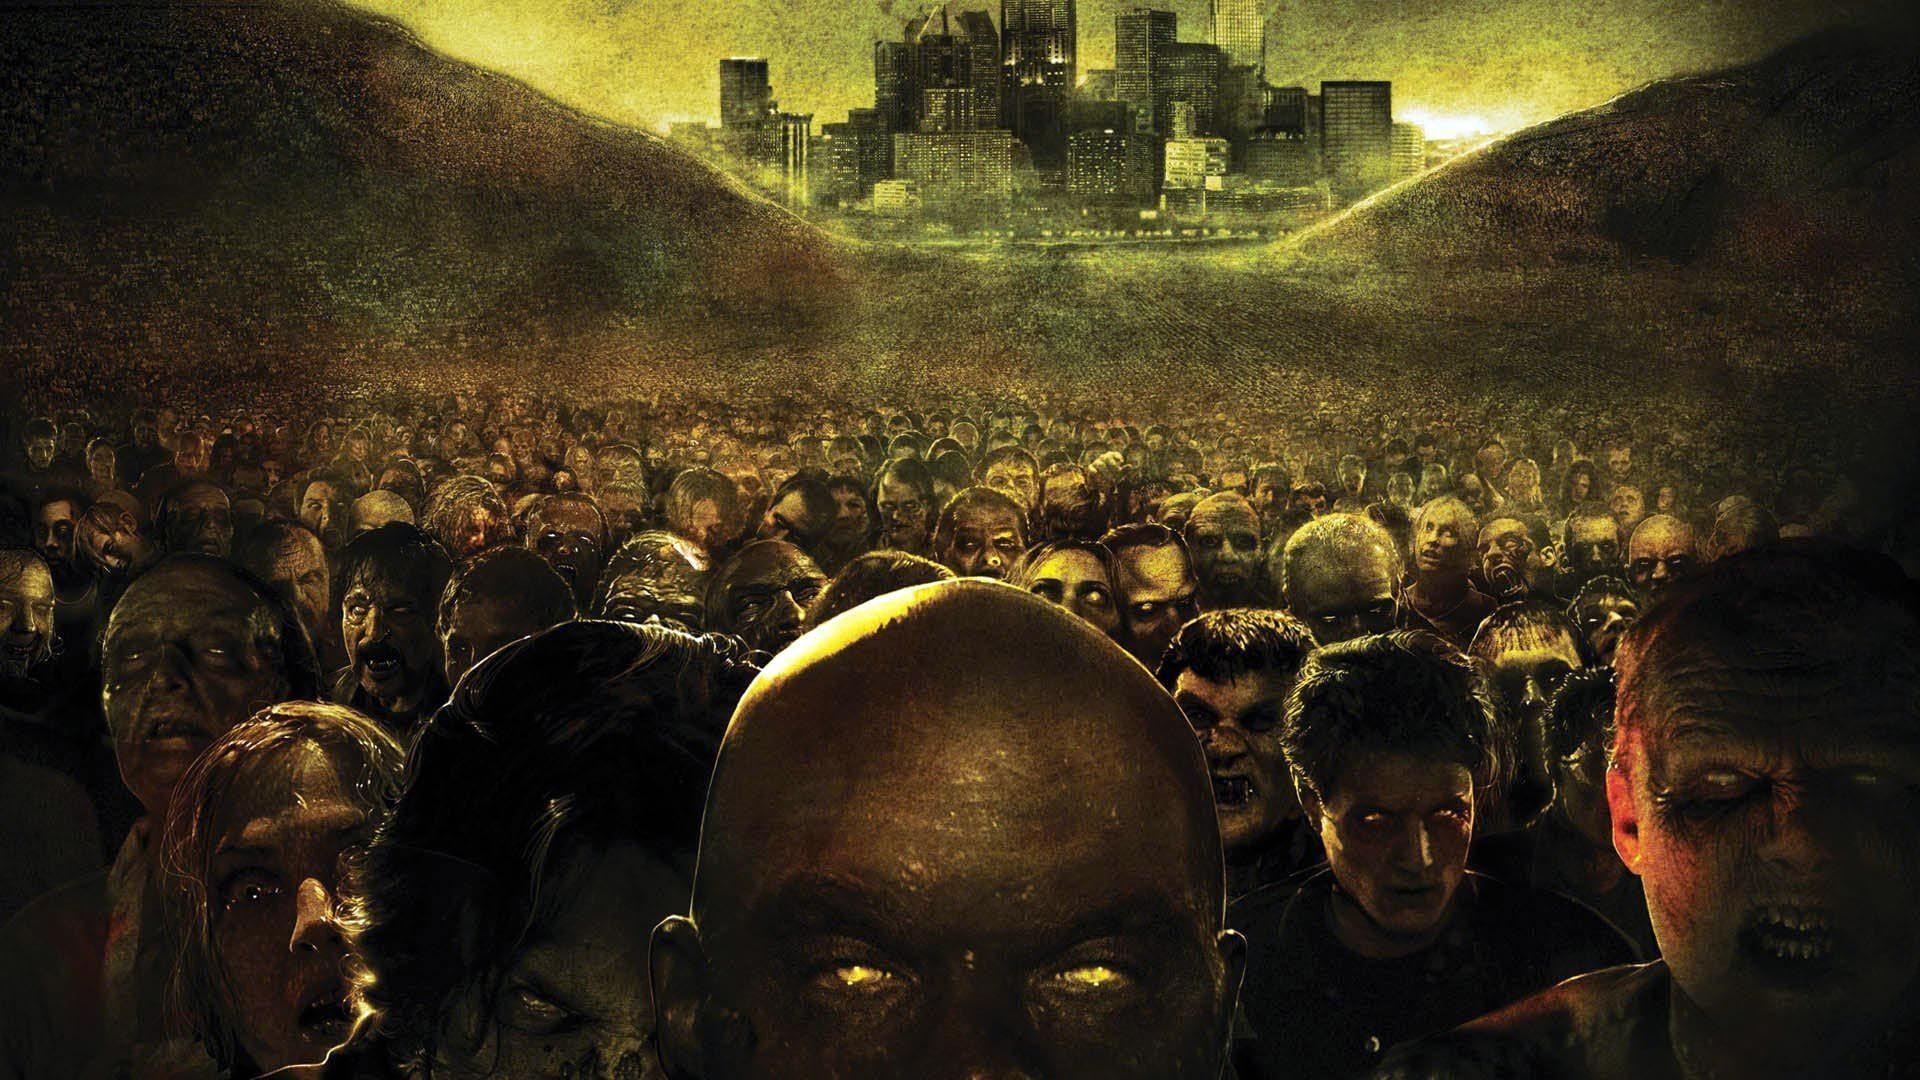 Zombie apocalypse wallpaper res, Zombie wallpaper